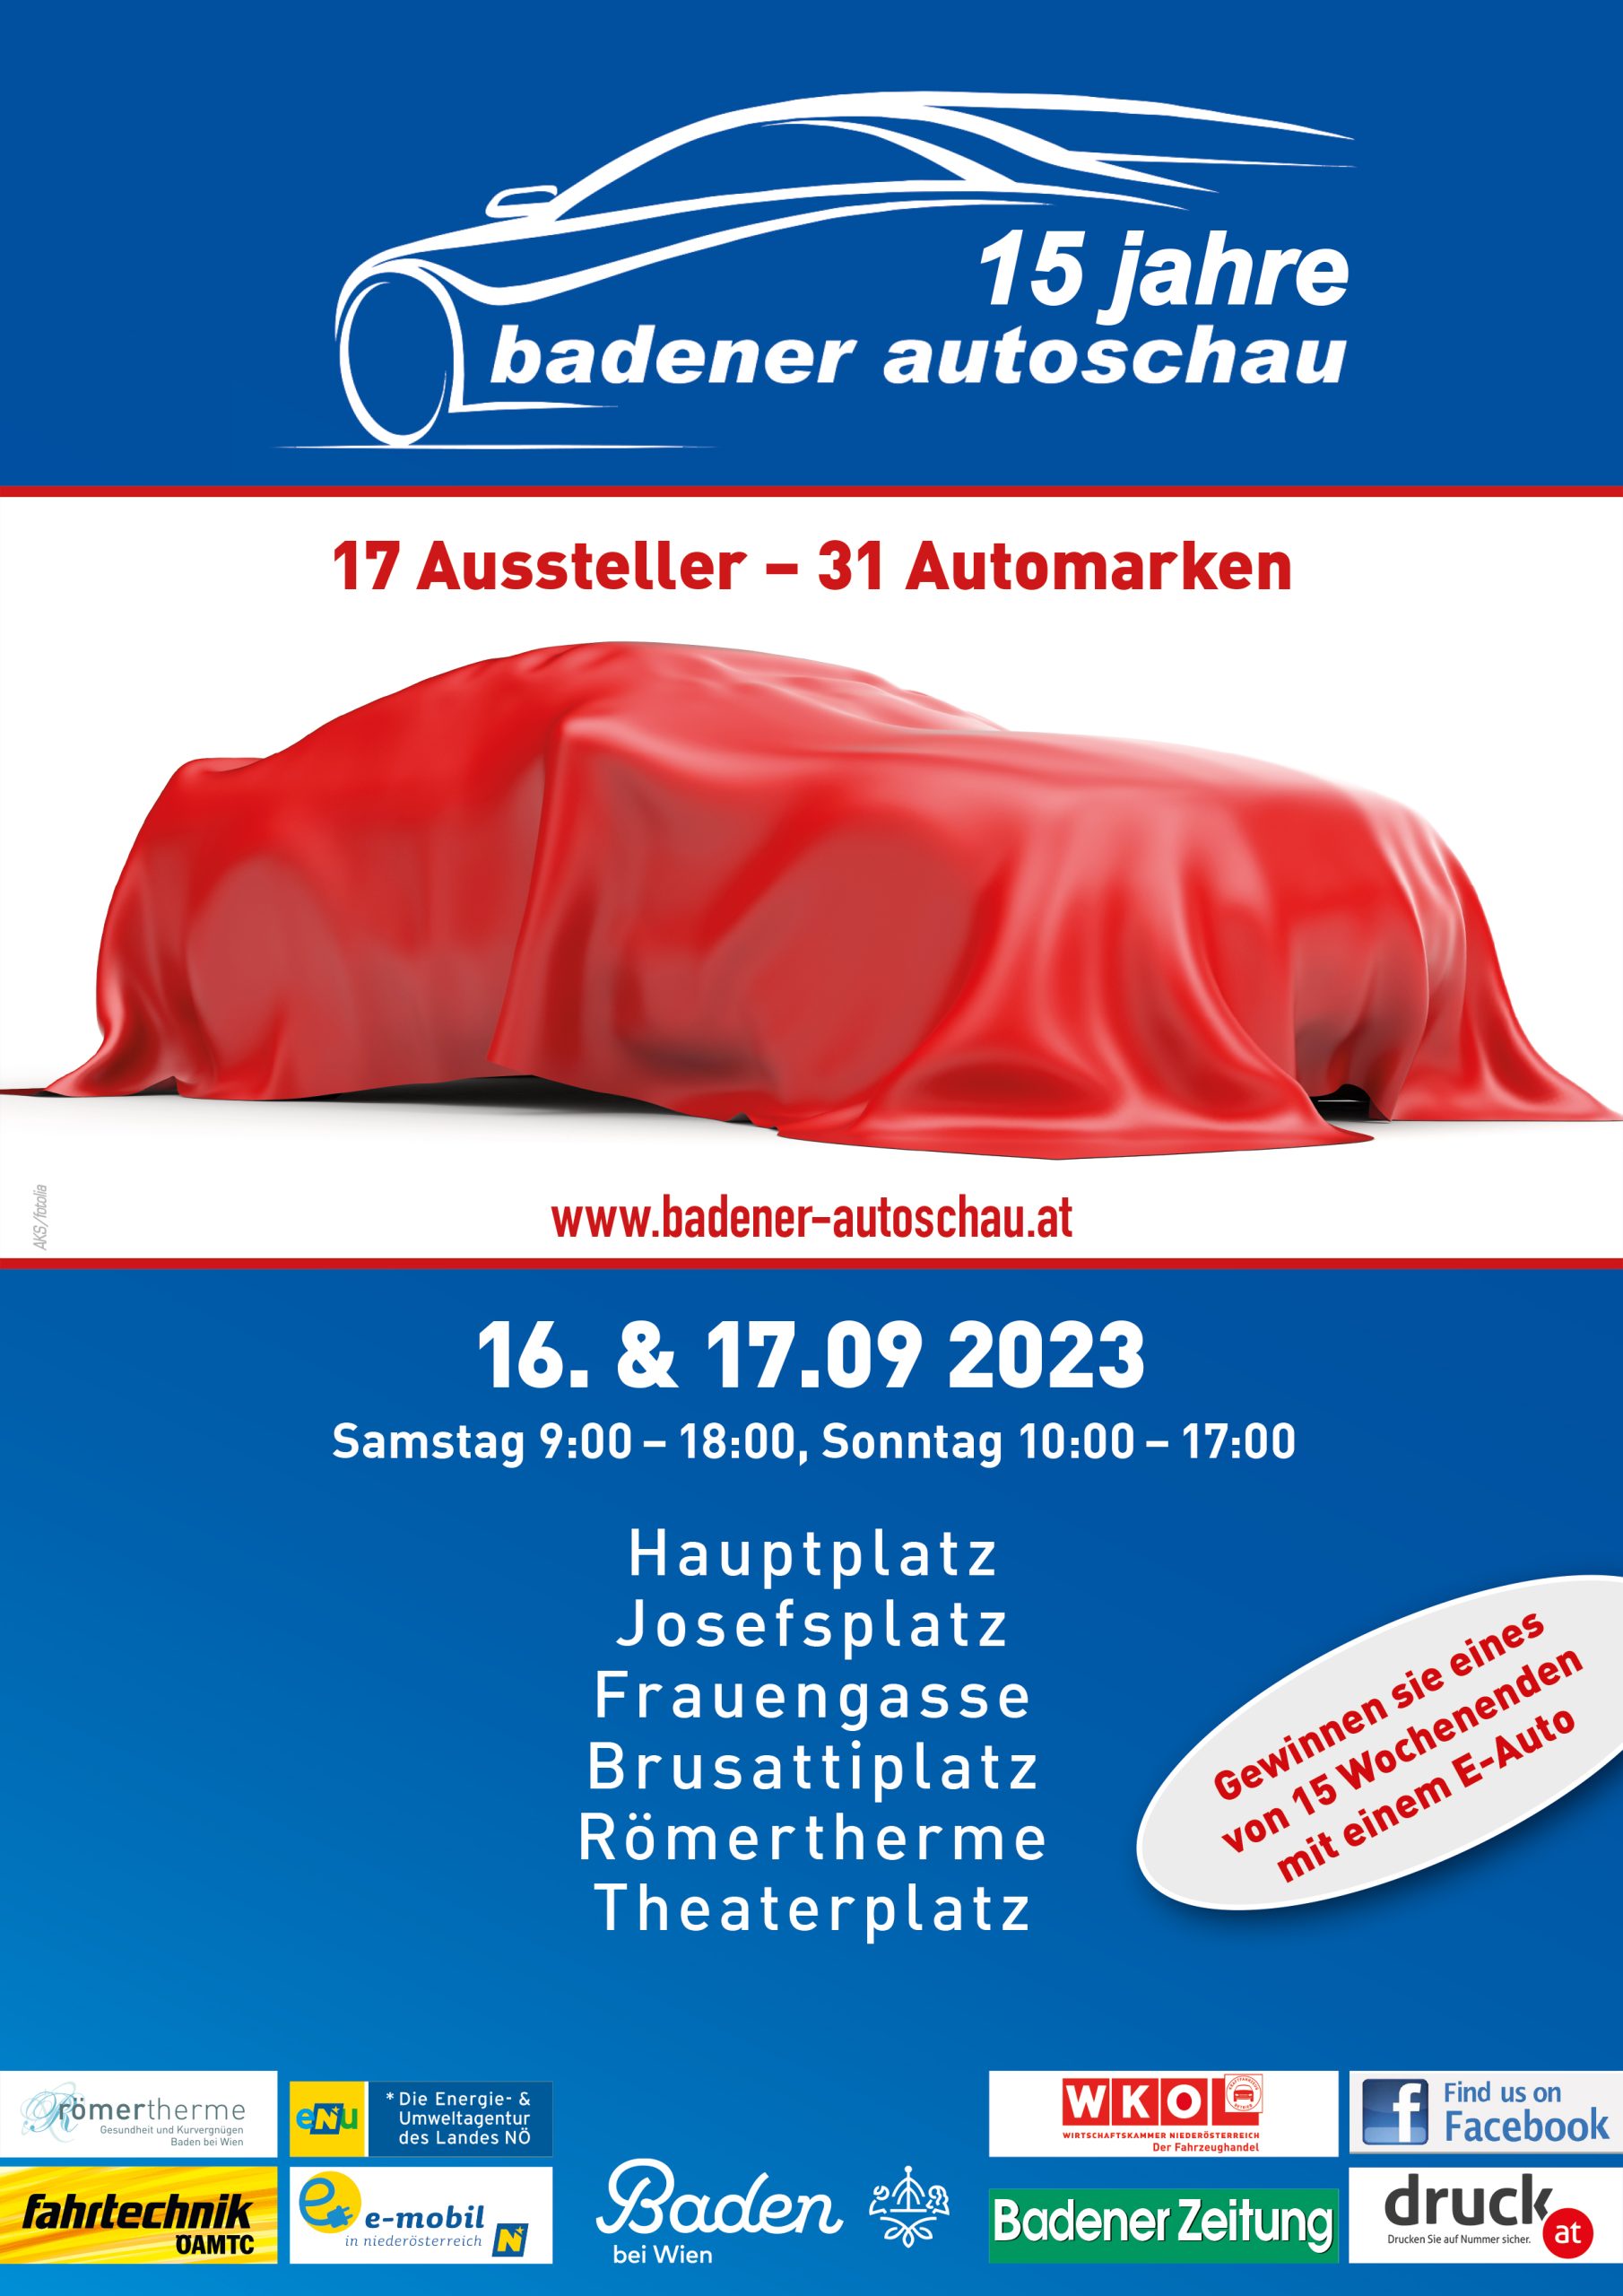 Badener Autoschau 2023